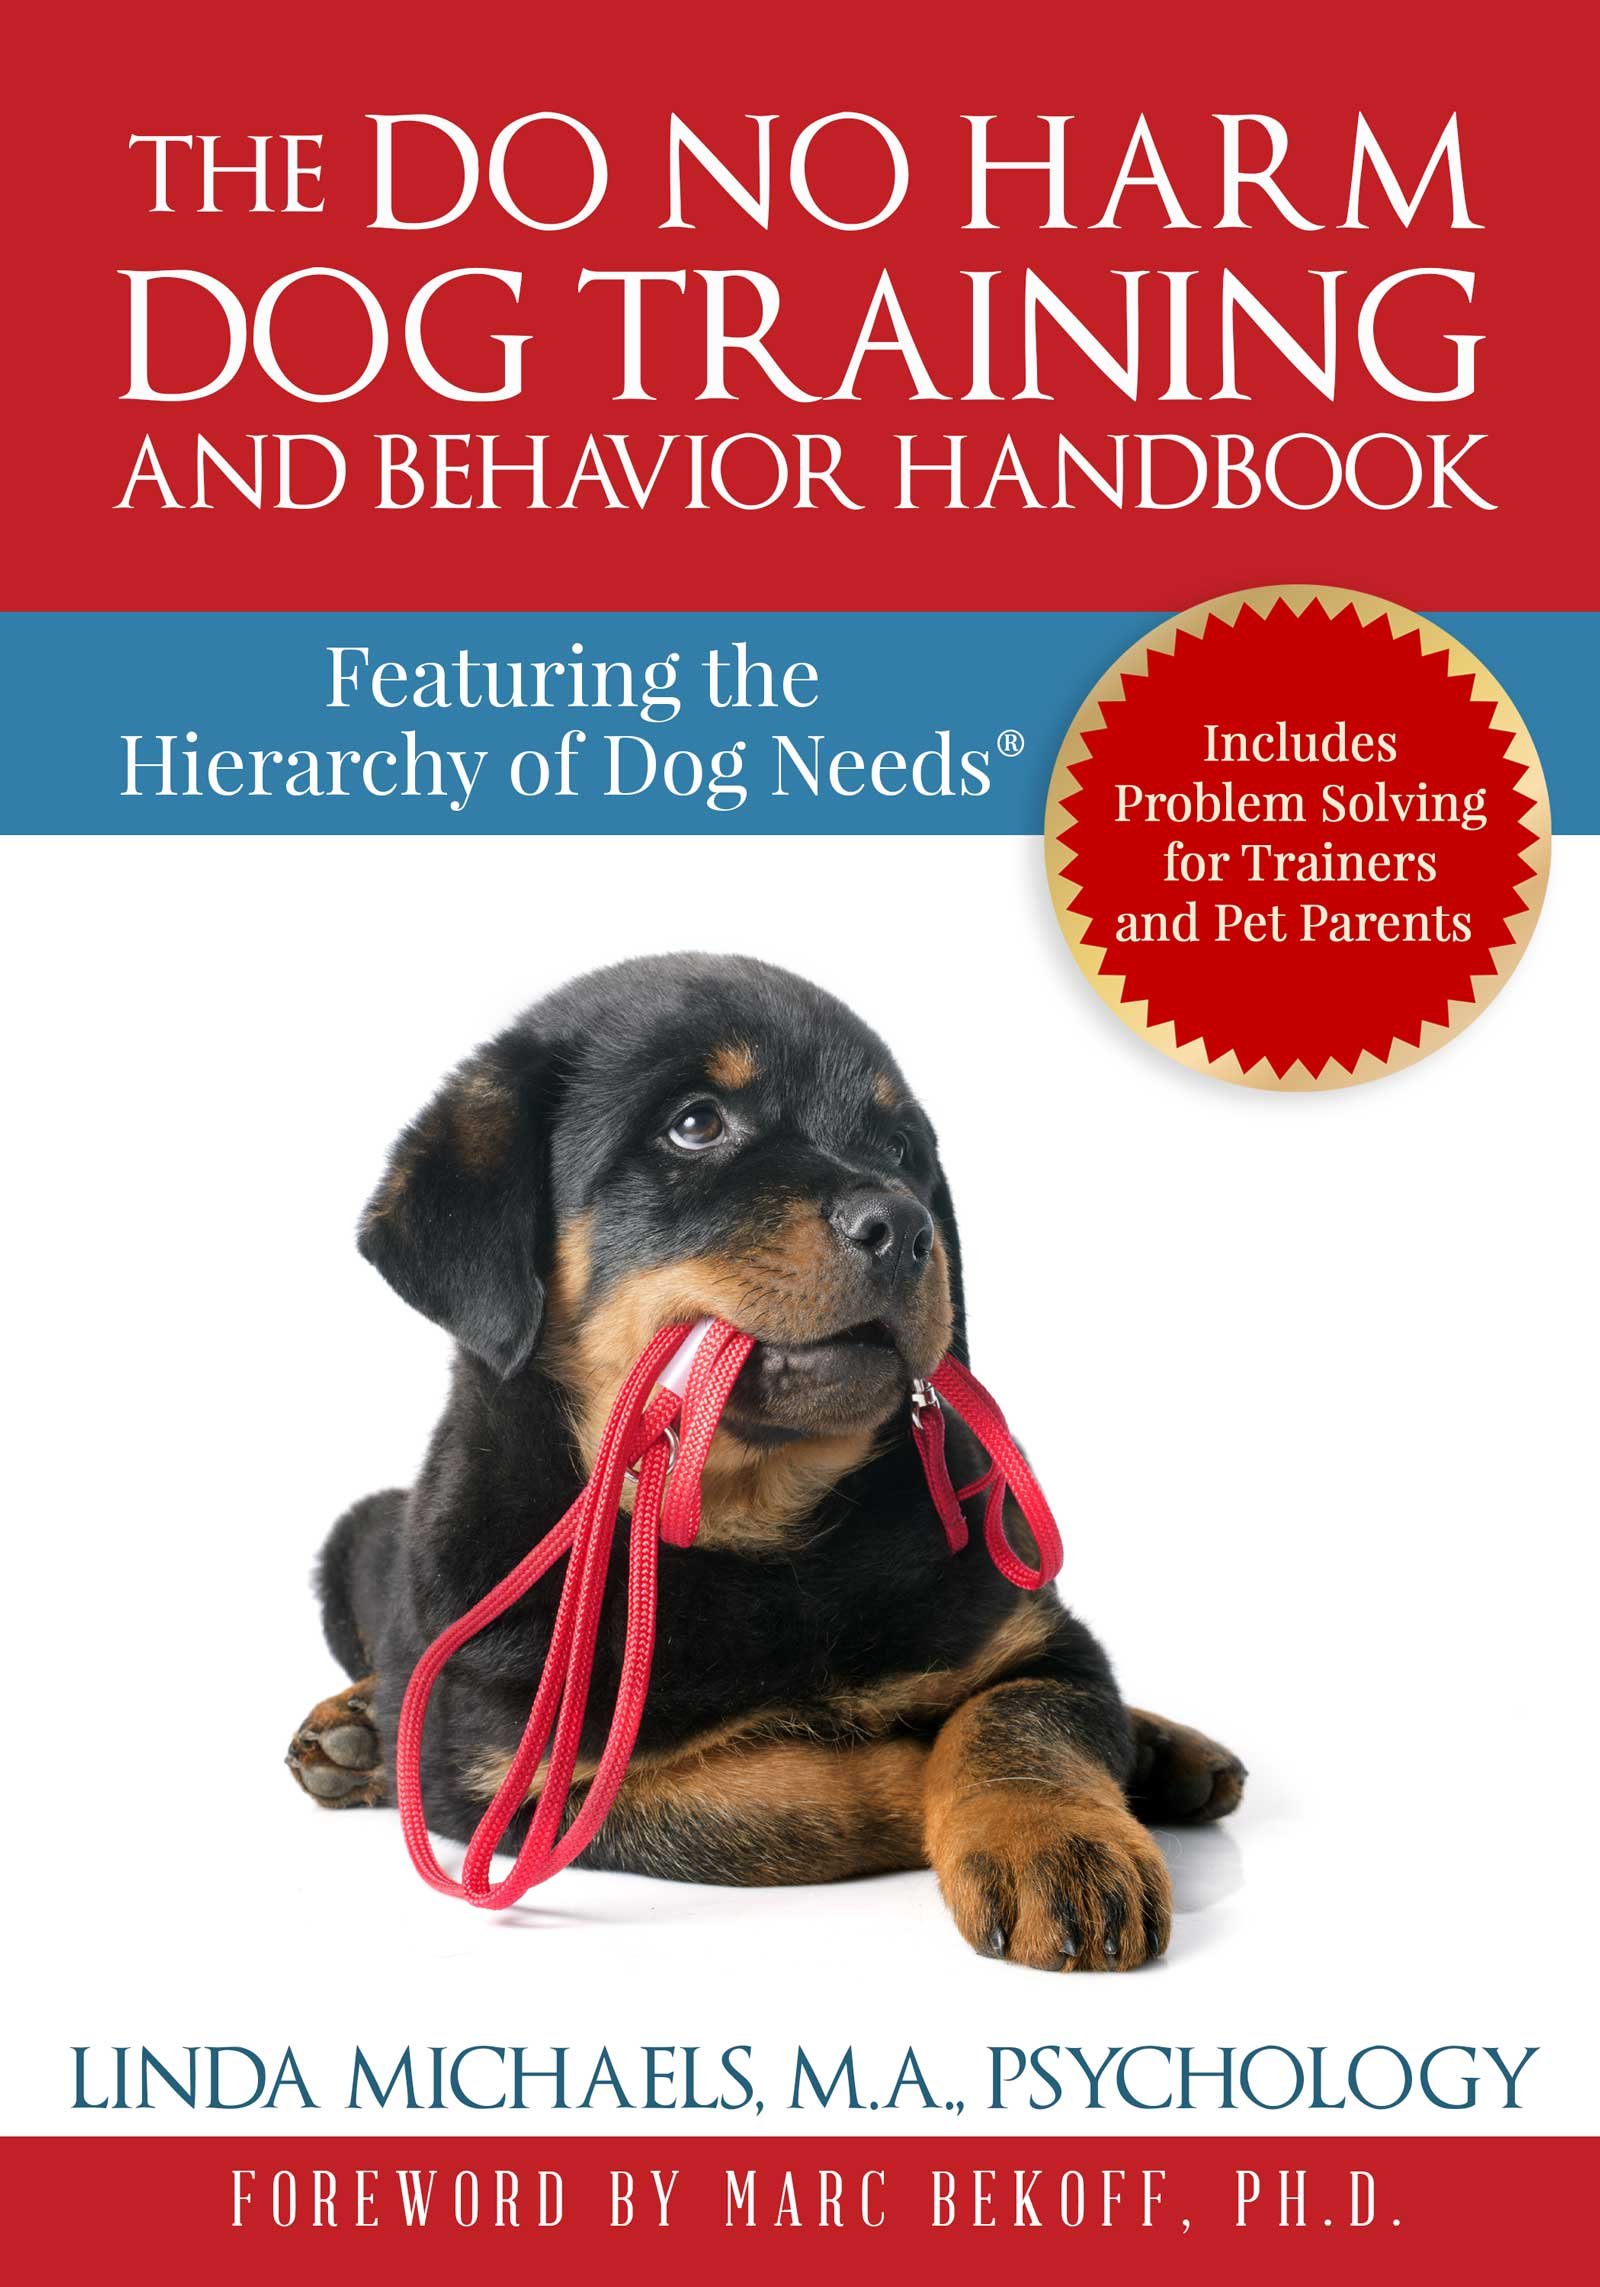 Do-No-Harm-Dog-Training_ebook-cover_IS_2021-10-21.jpg